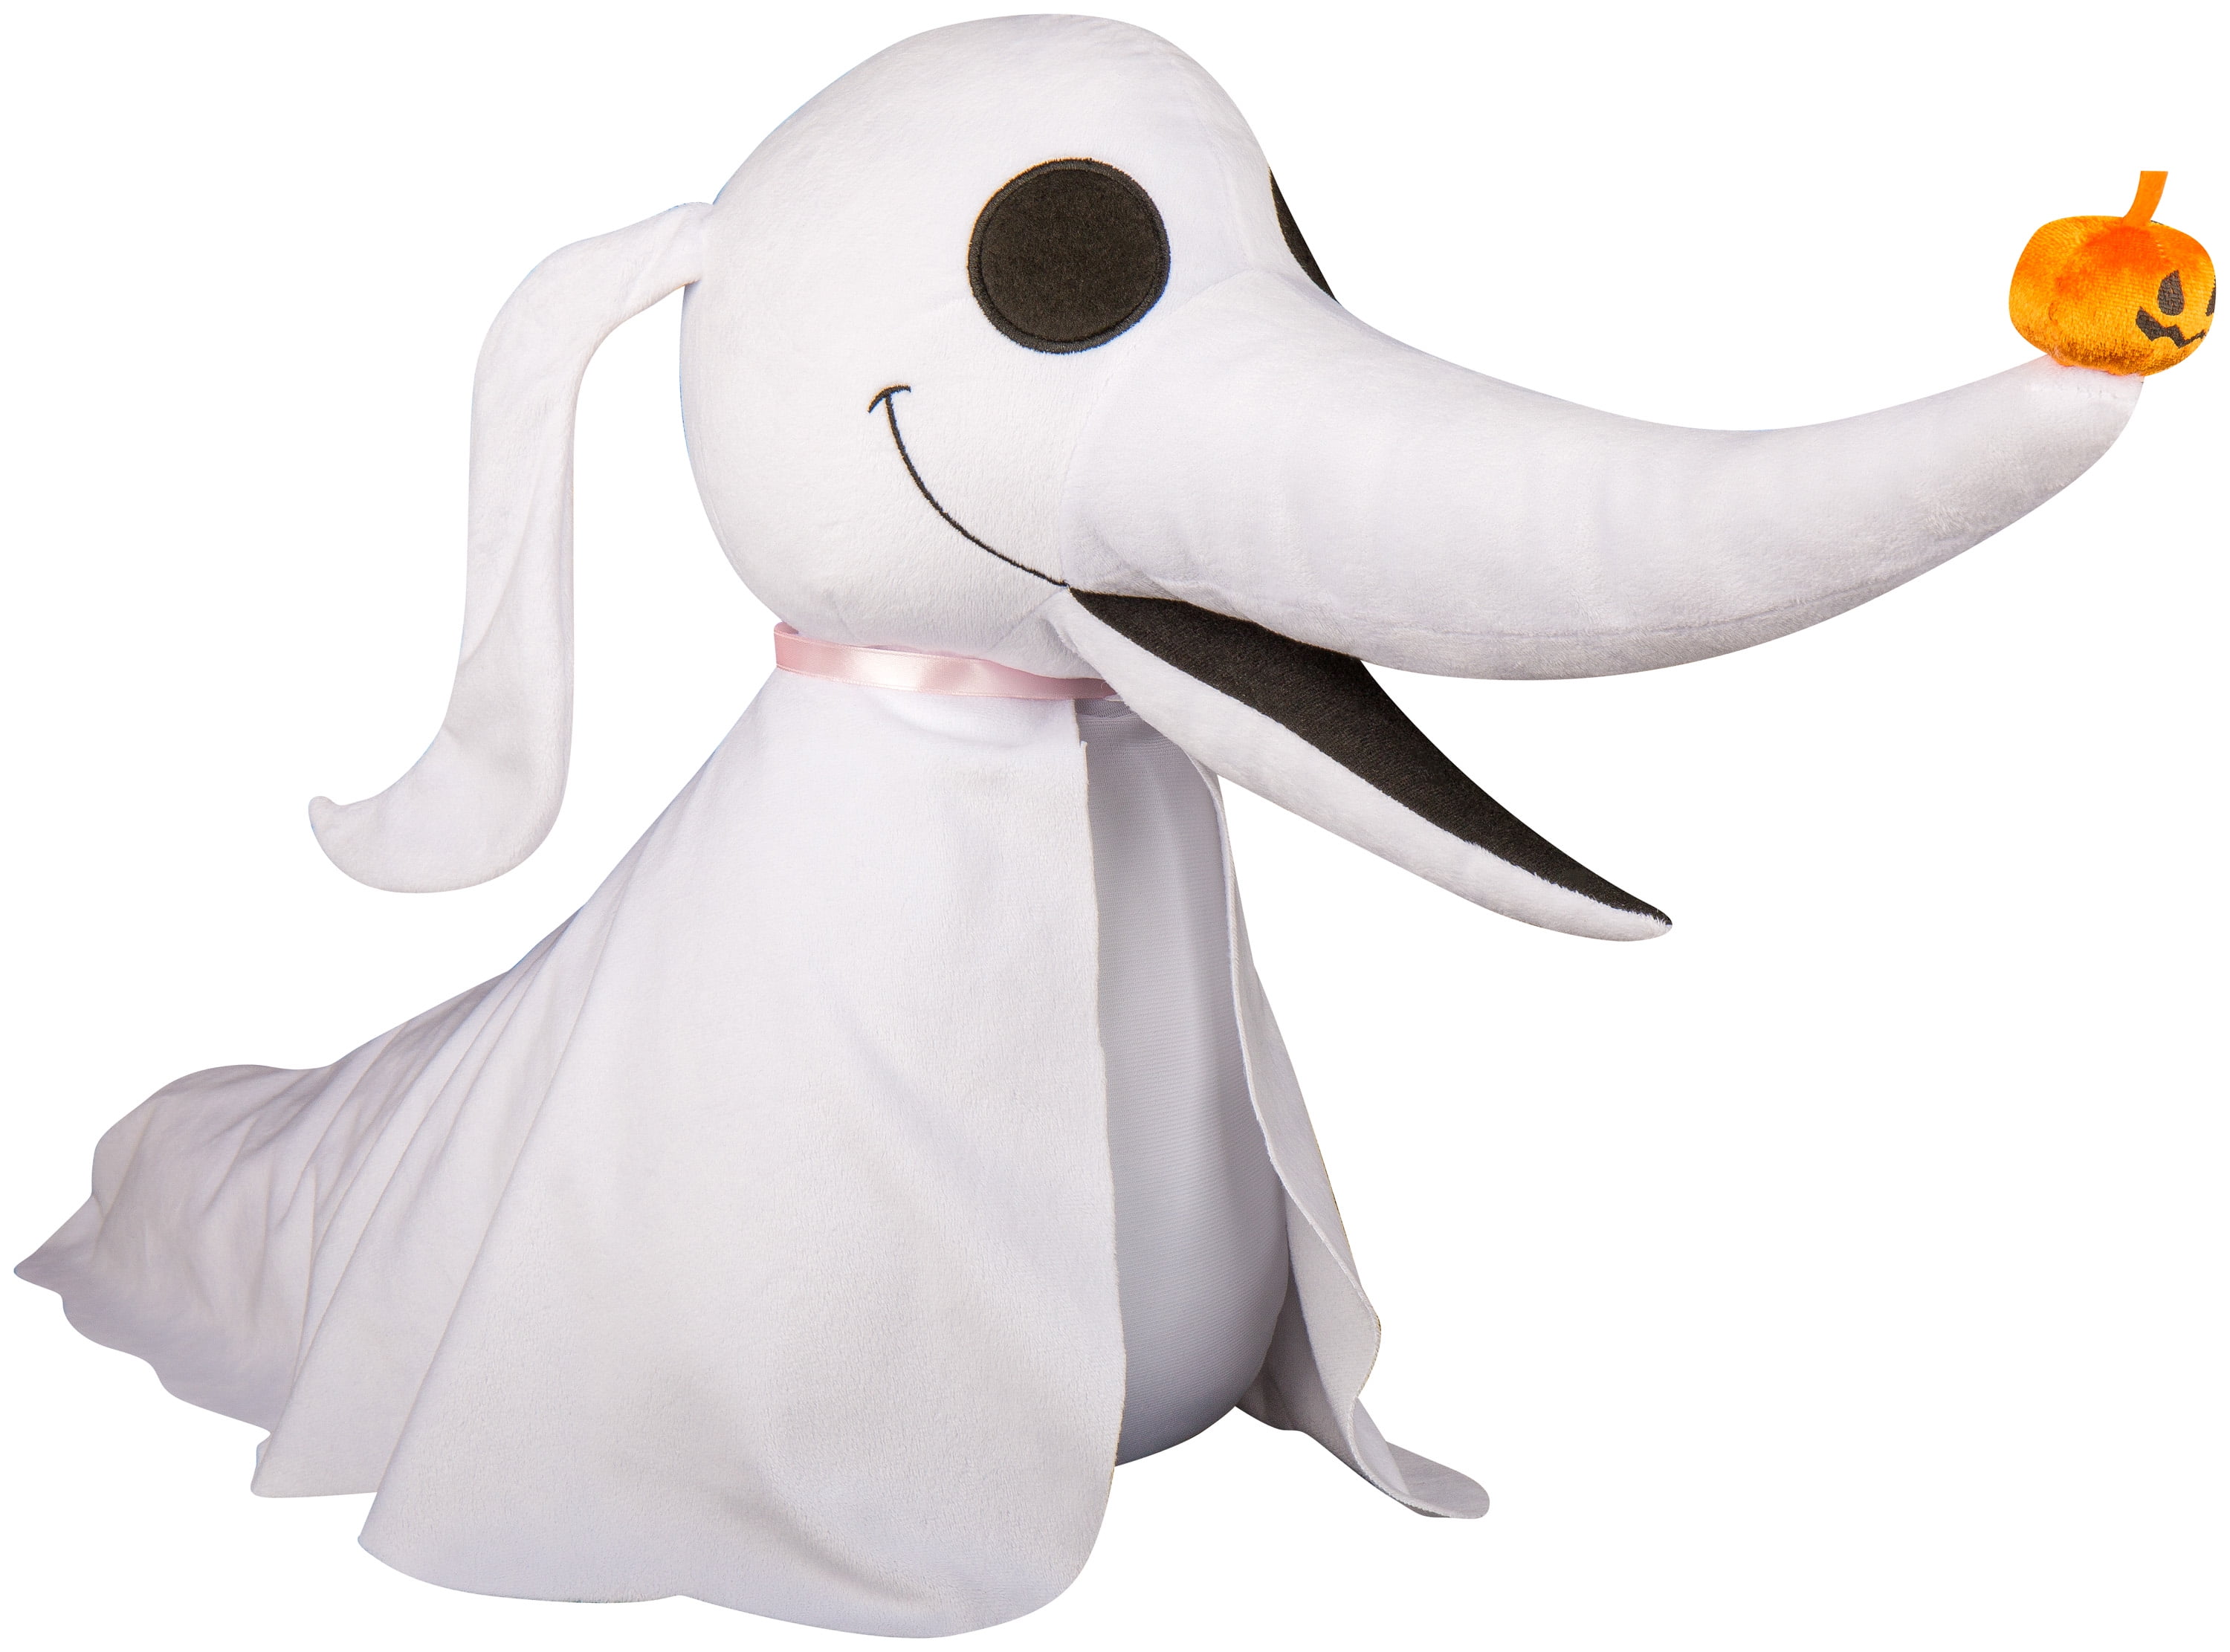 Nightmare Before Christmas Zero Plush Doll Jack's Ghost Dog Toys Xmas Gift  8''